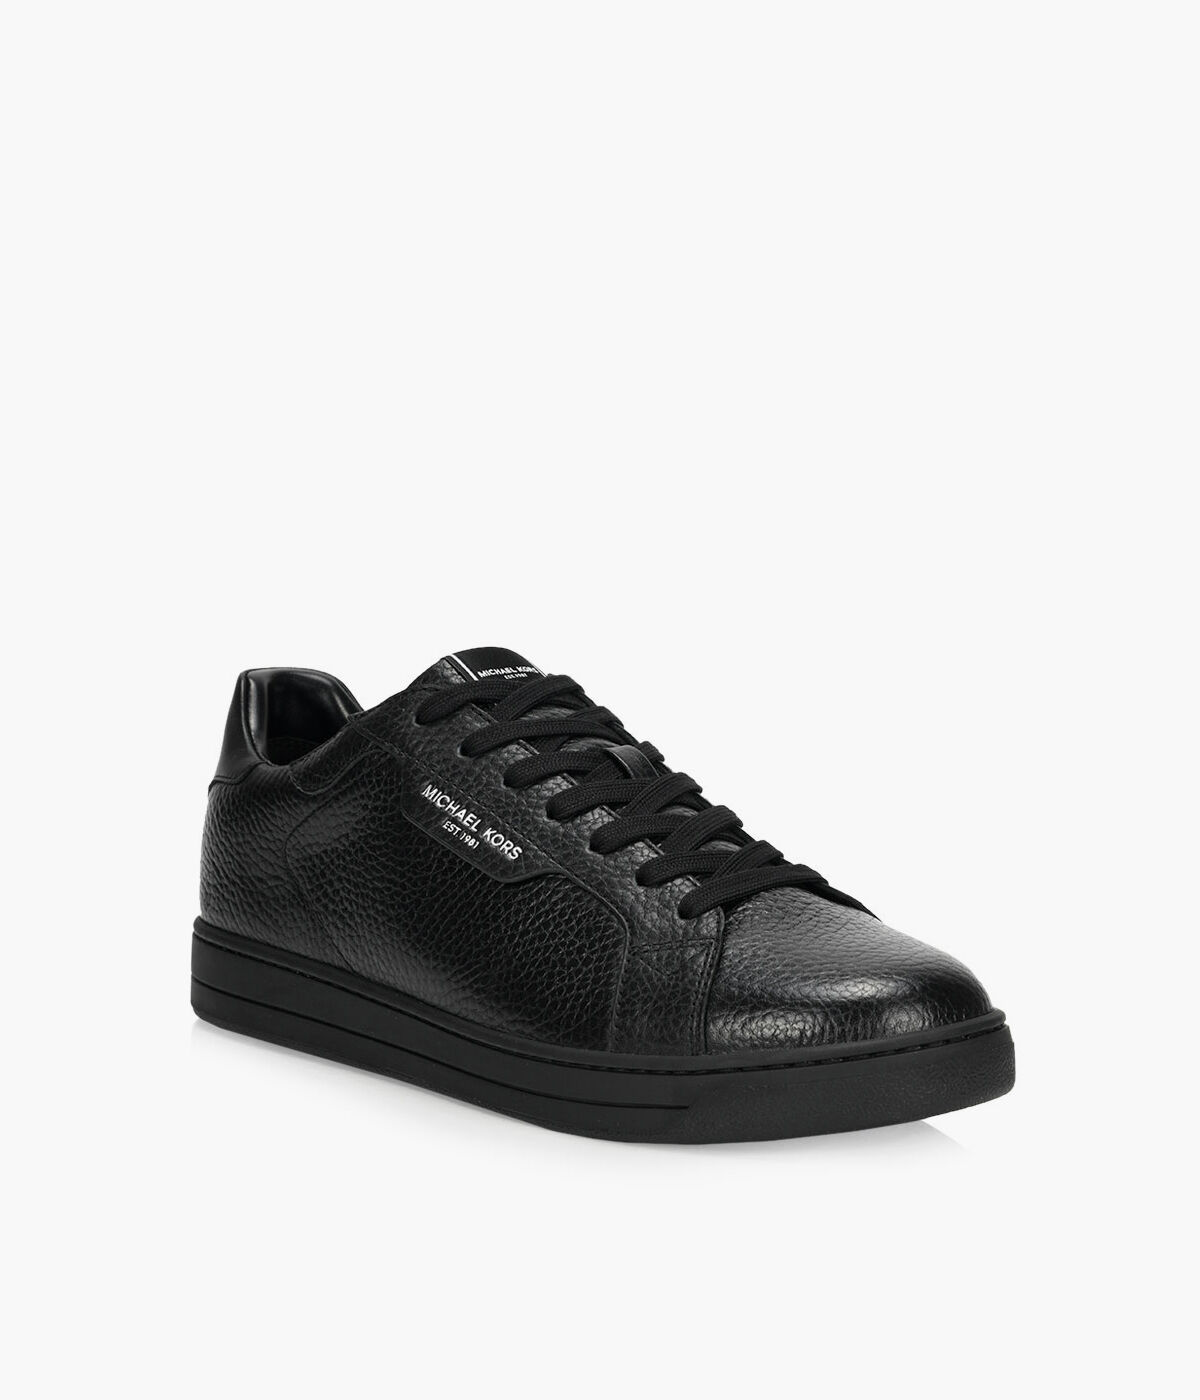 MICHAEL KORS MENS KEATING SNEAKER - Black Leather | Browns Shoes